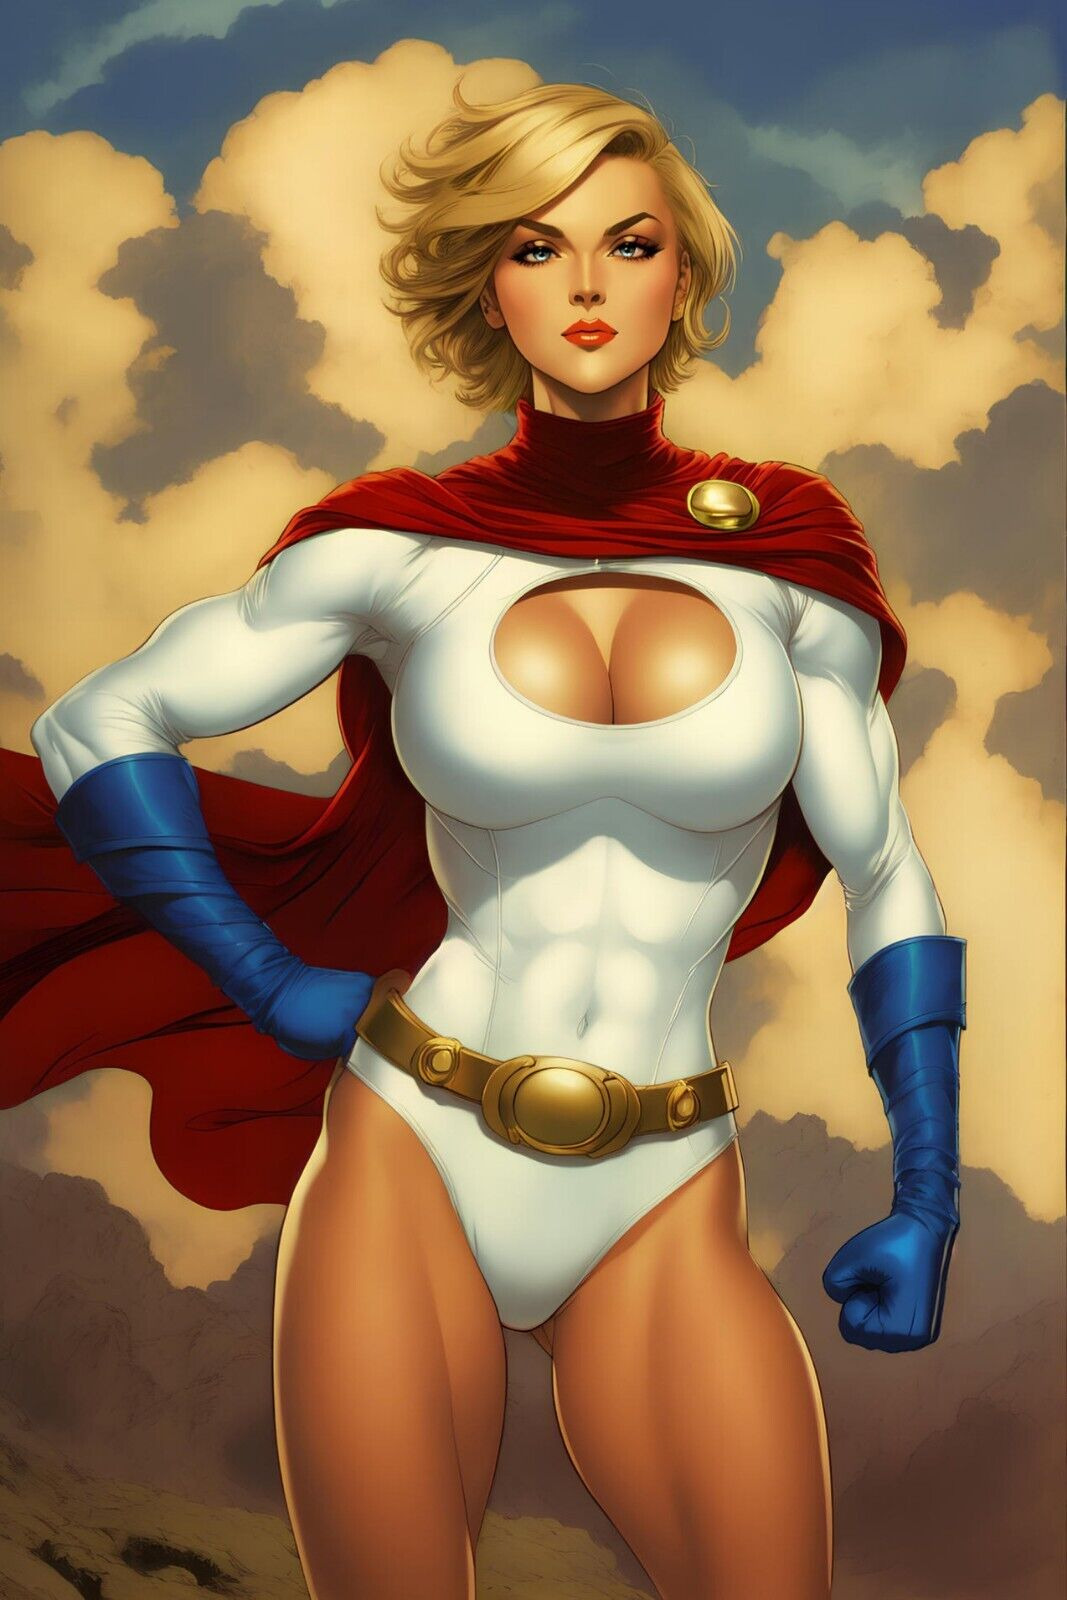 Power Girl 11x17 Bruce Wayne POSTER DC Comics Superman Harley Quin Catwoman